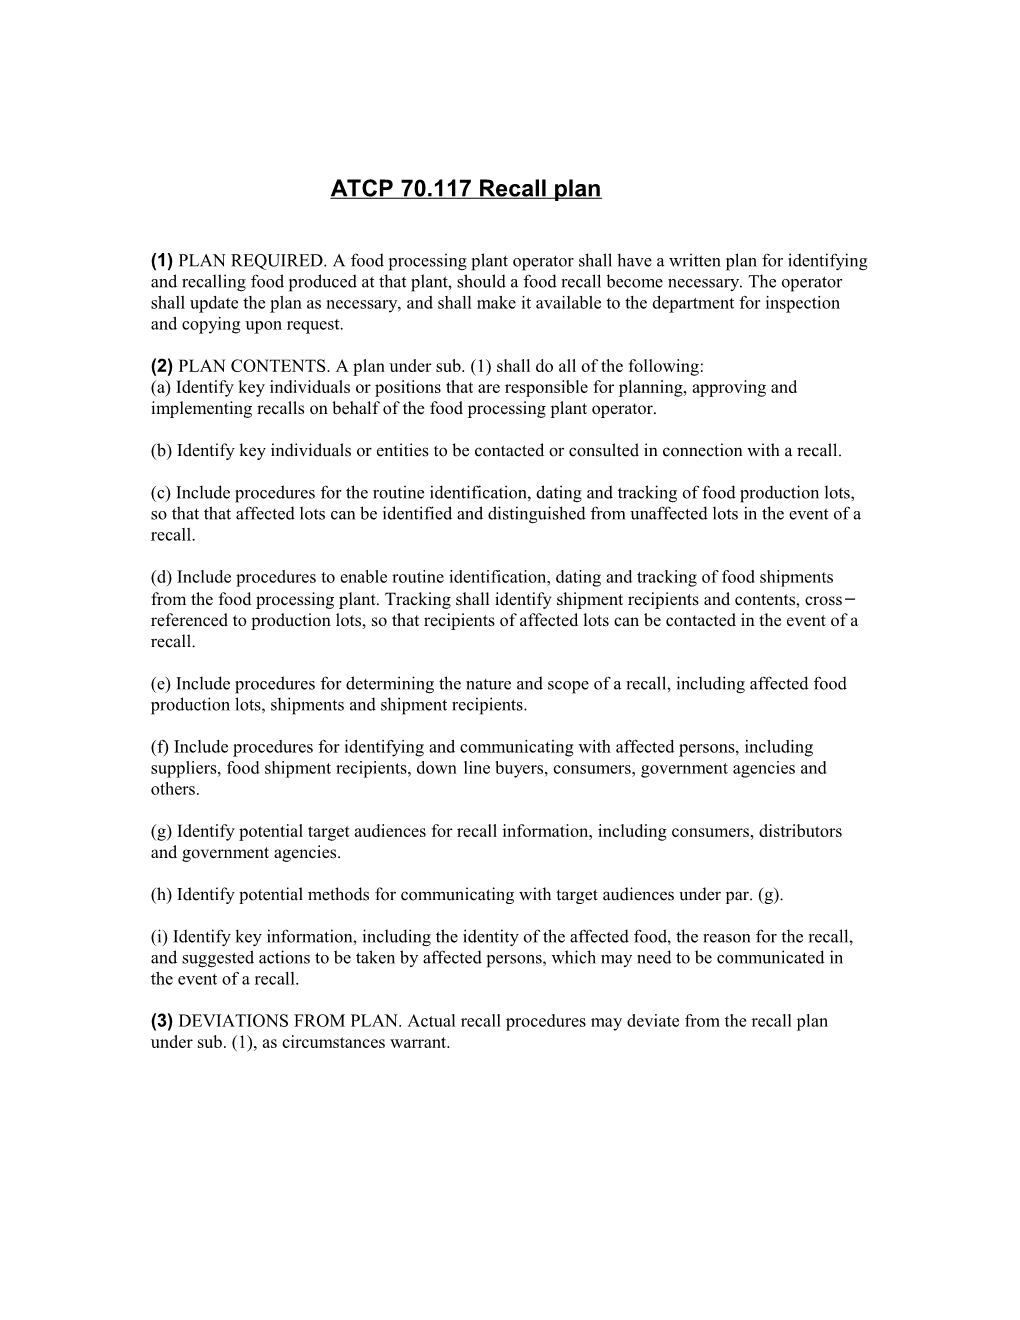 ATCP 70.117 Recall Plan